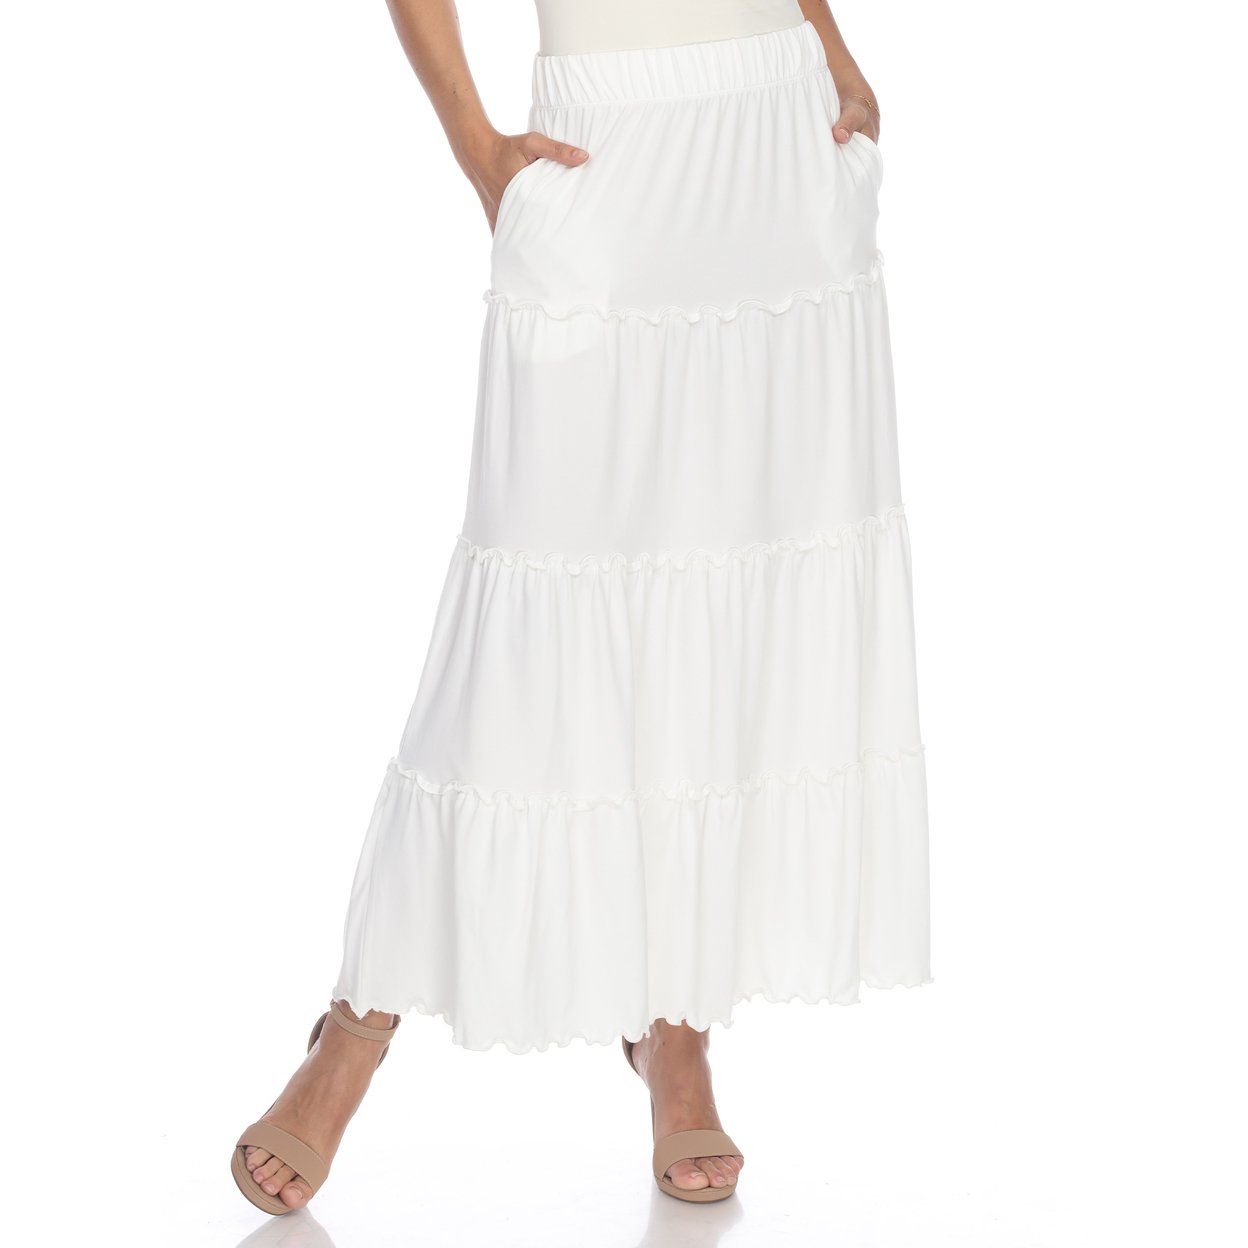 White Mark Women's Tiered Maxi Skirt With Pockets - Black, Medium